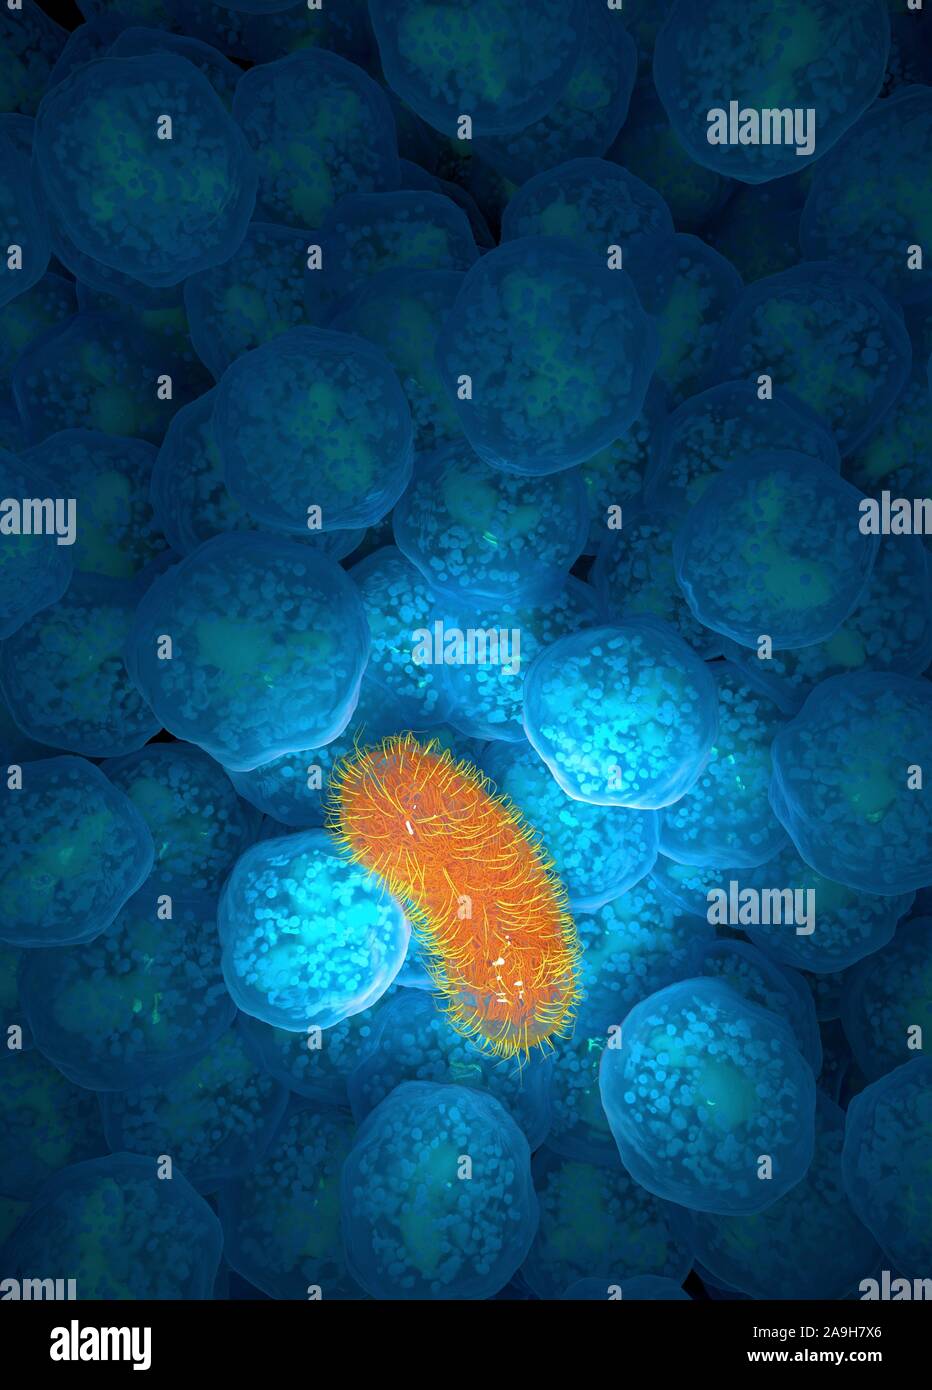 Neutrophil immune response, illustration Stock Photo